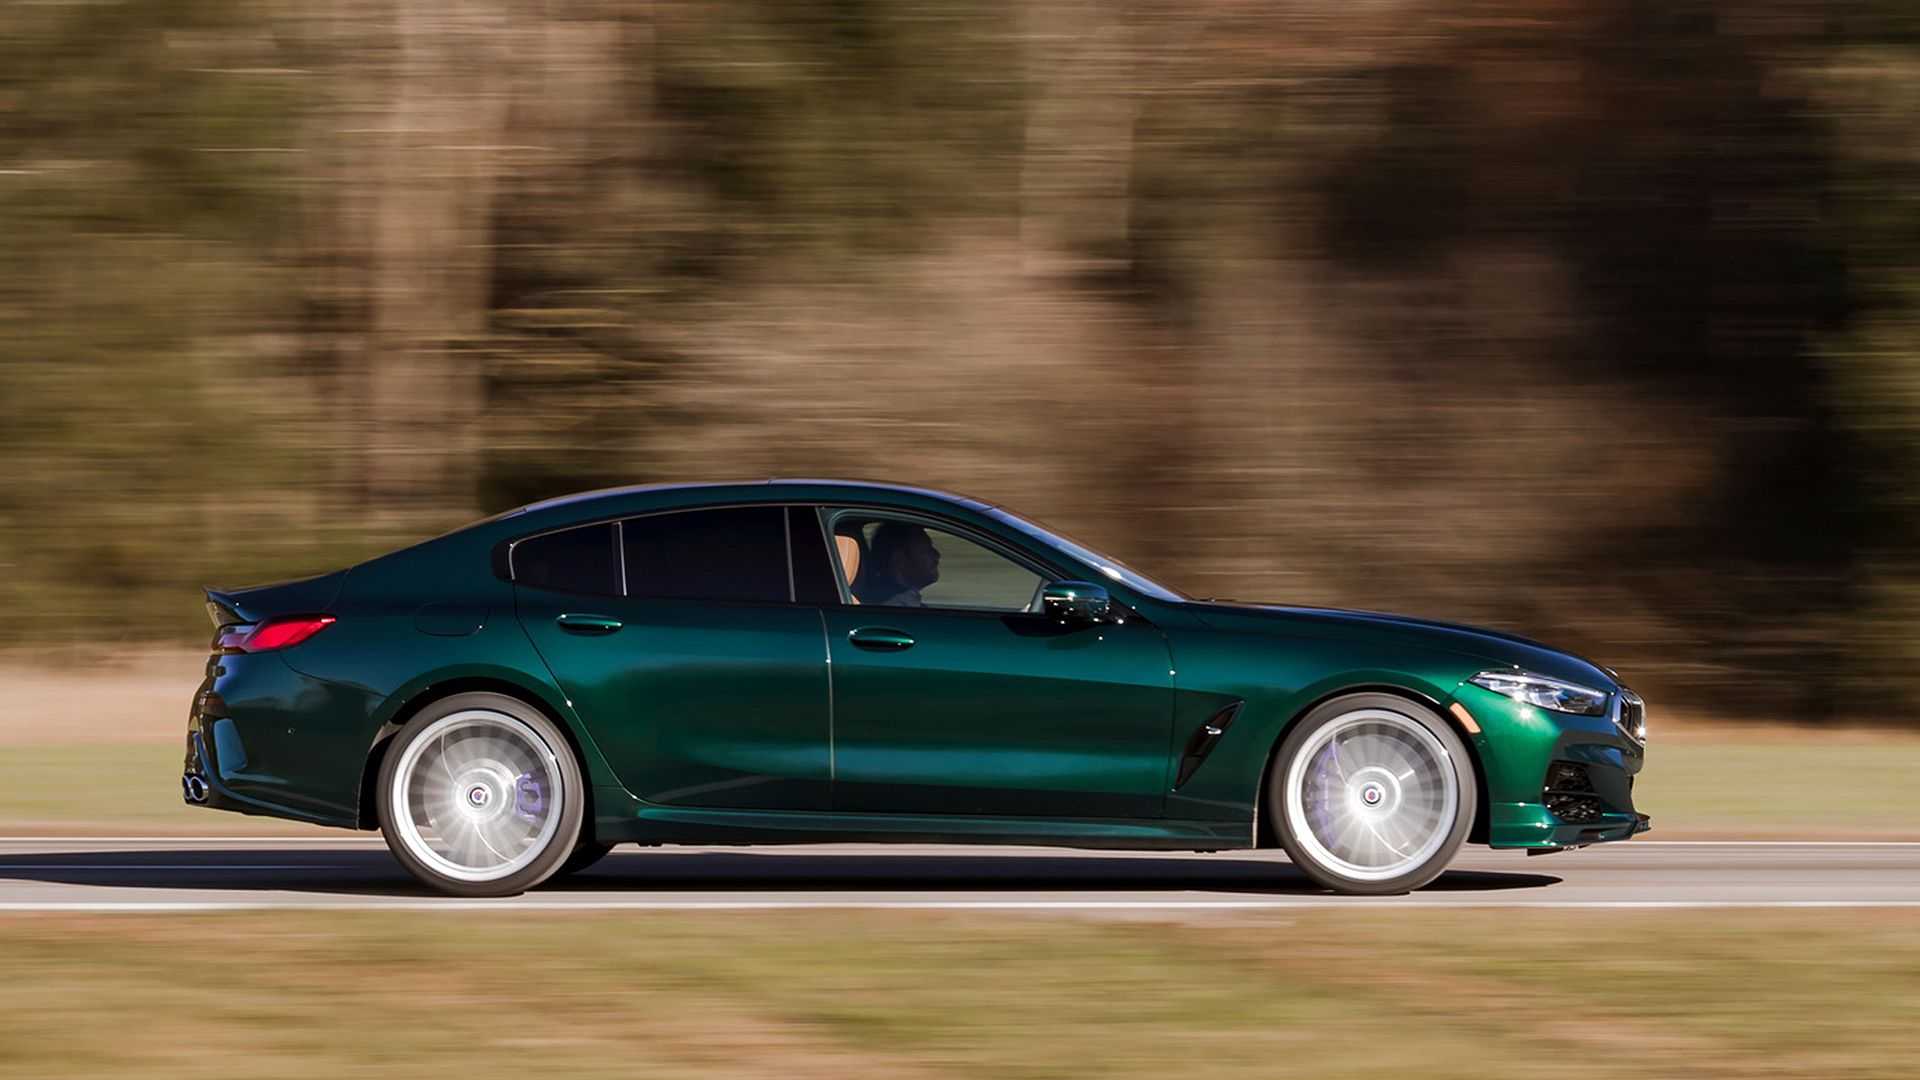 Das neue Alpina B8 Gran Coupé: Edle Luxus-Alternative zum BMW M8